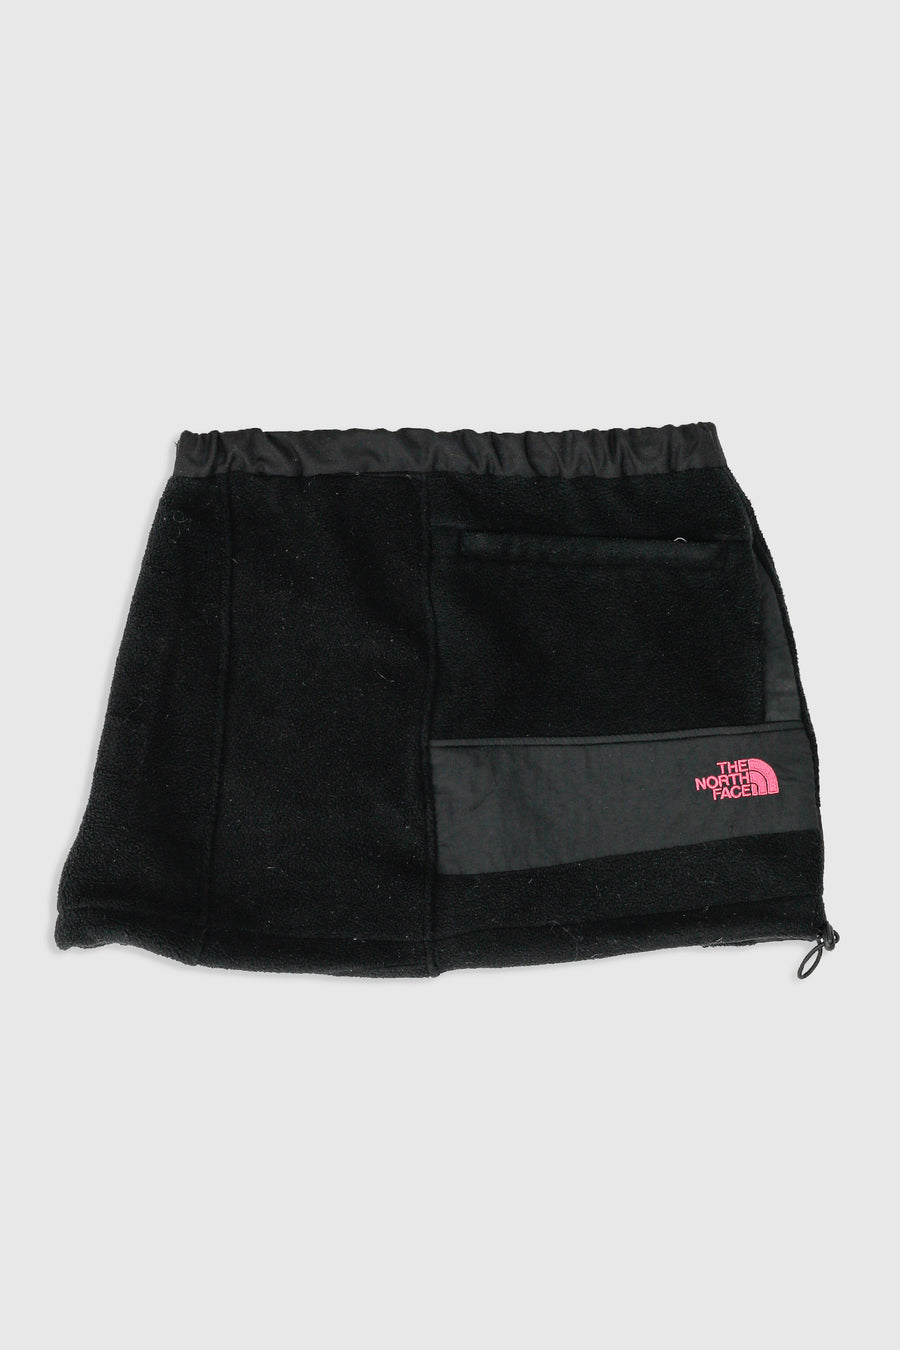 Rework North Face Fleece Mini Skirt - XS, S, M, L